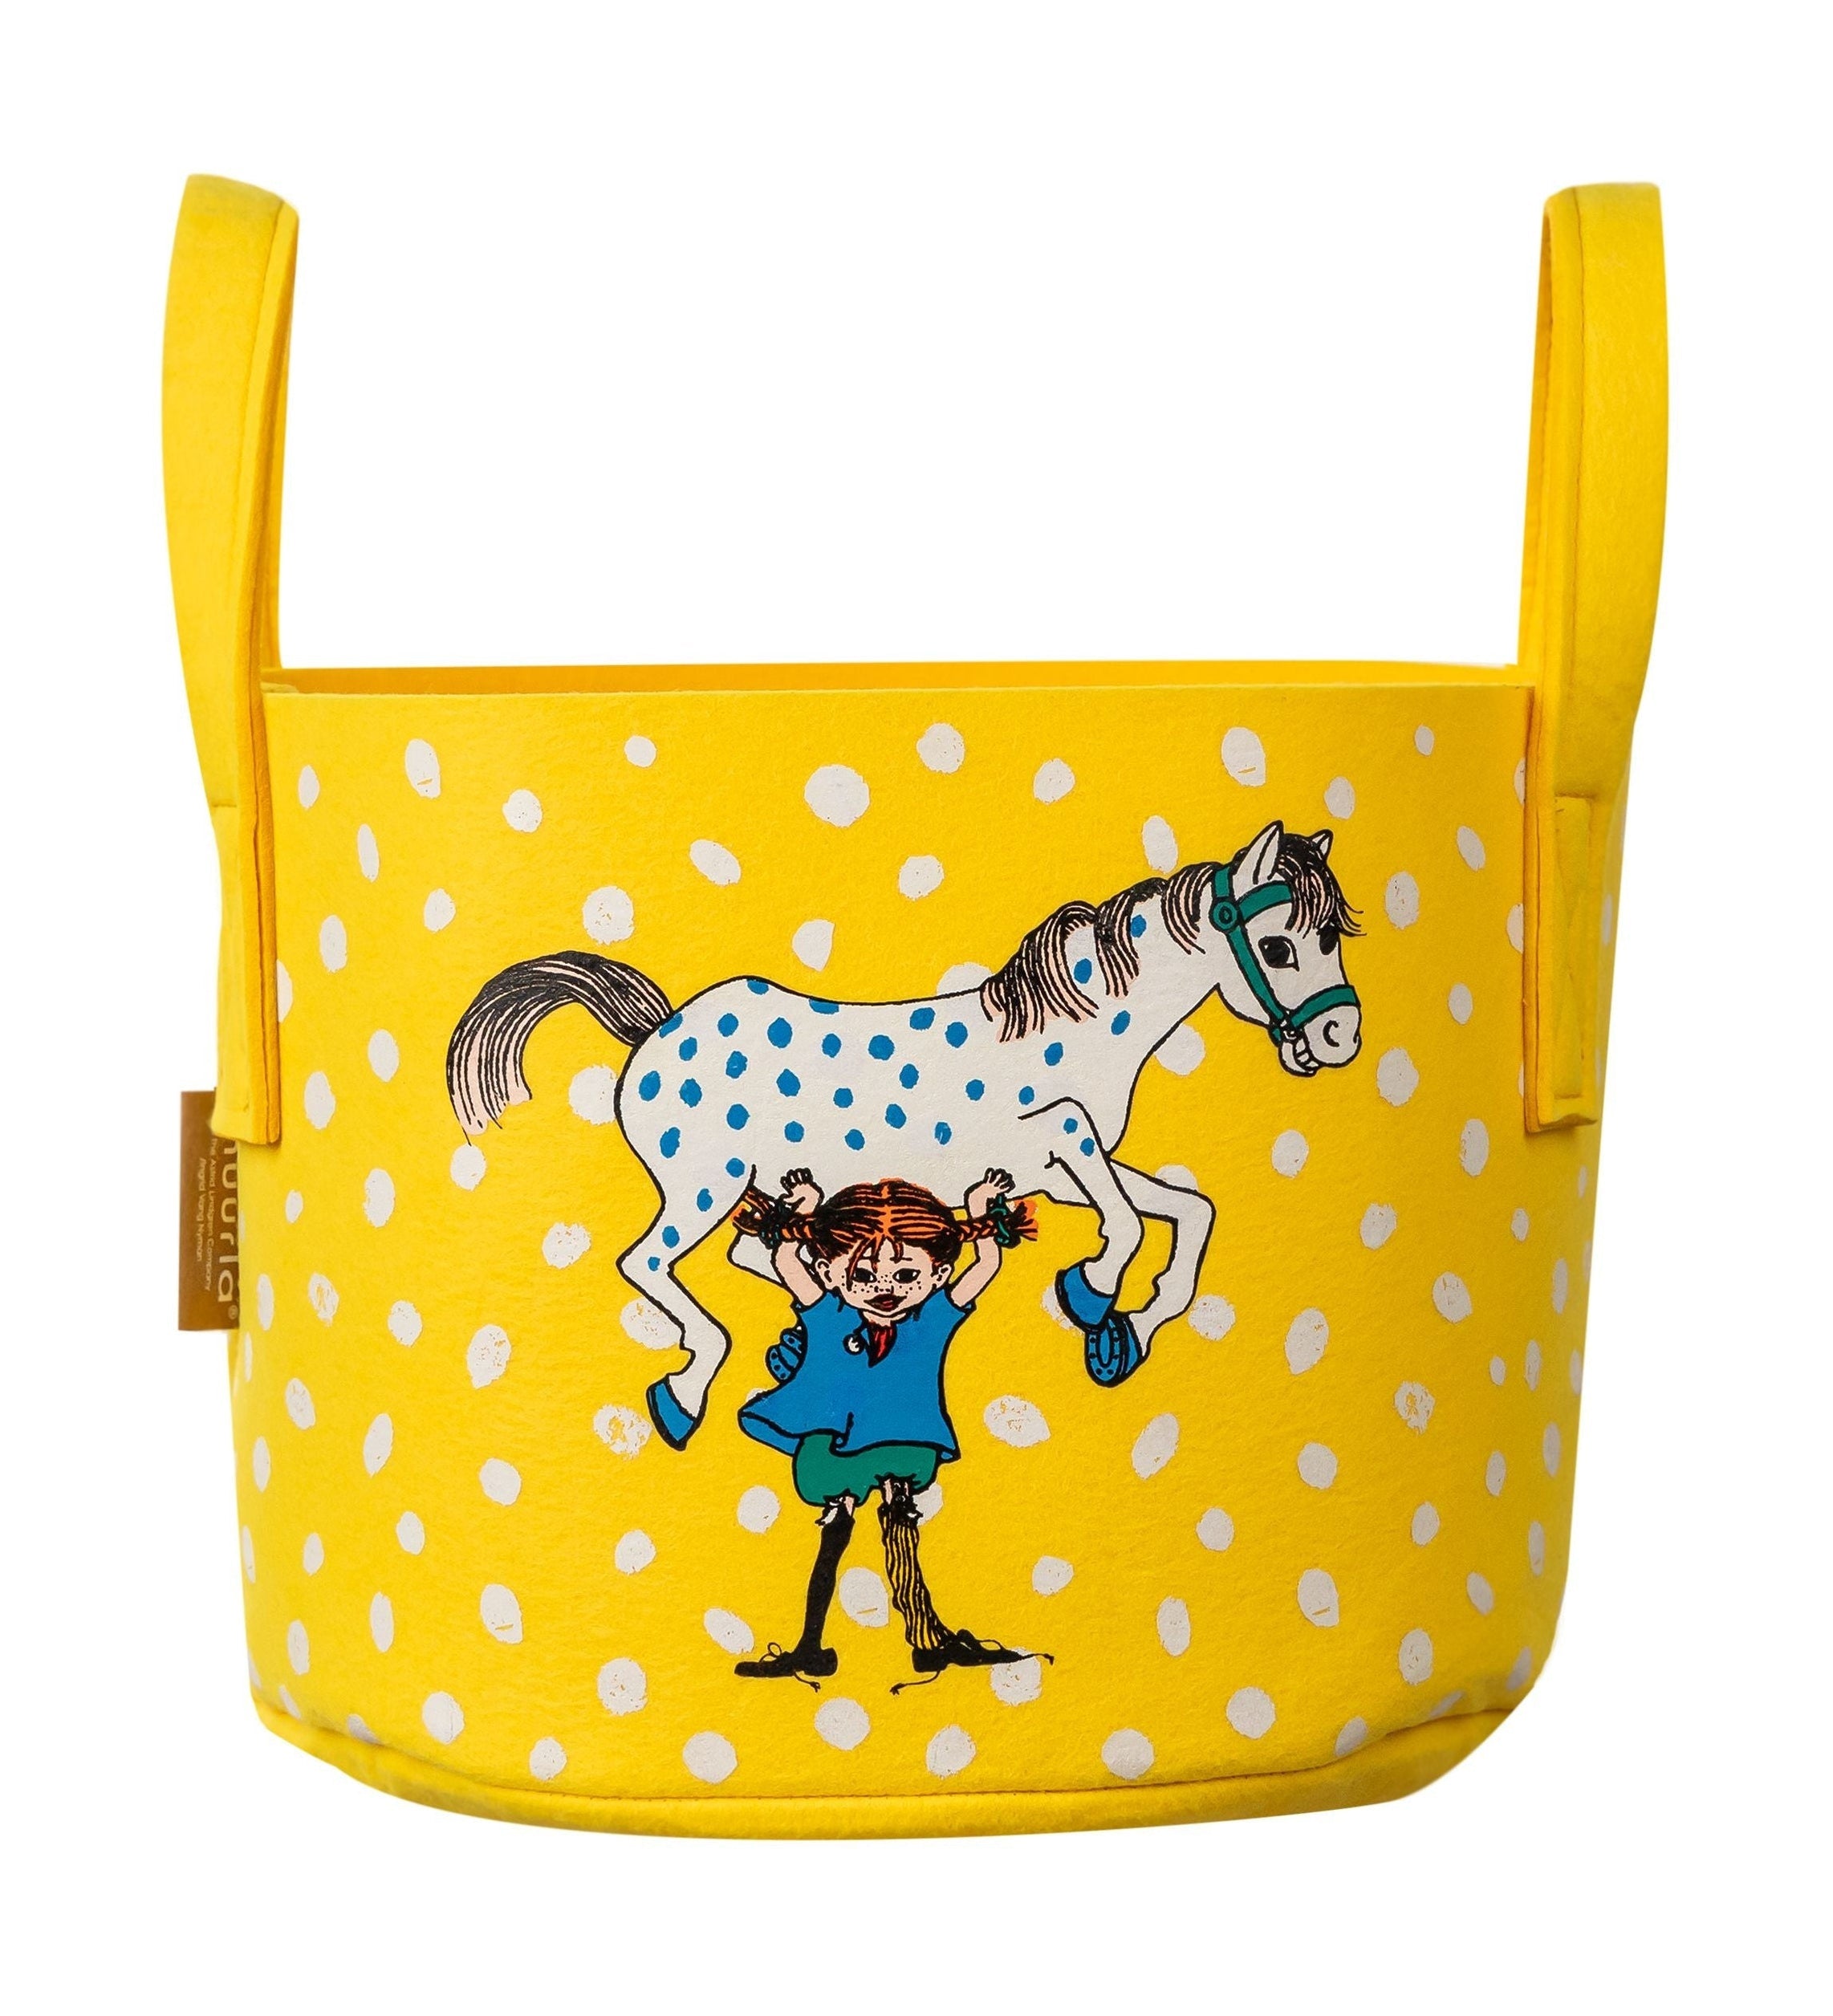 Muurla Pippi Longstocking Basket, Pippi and the Horse, Yellow